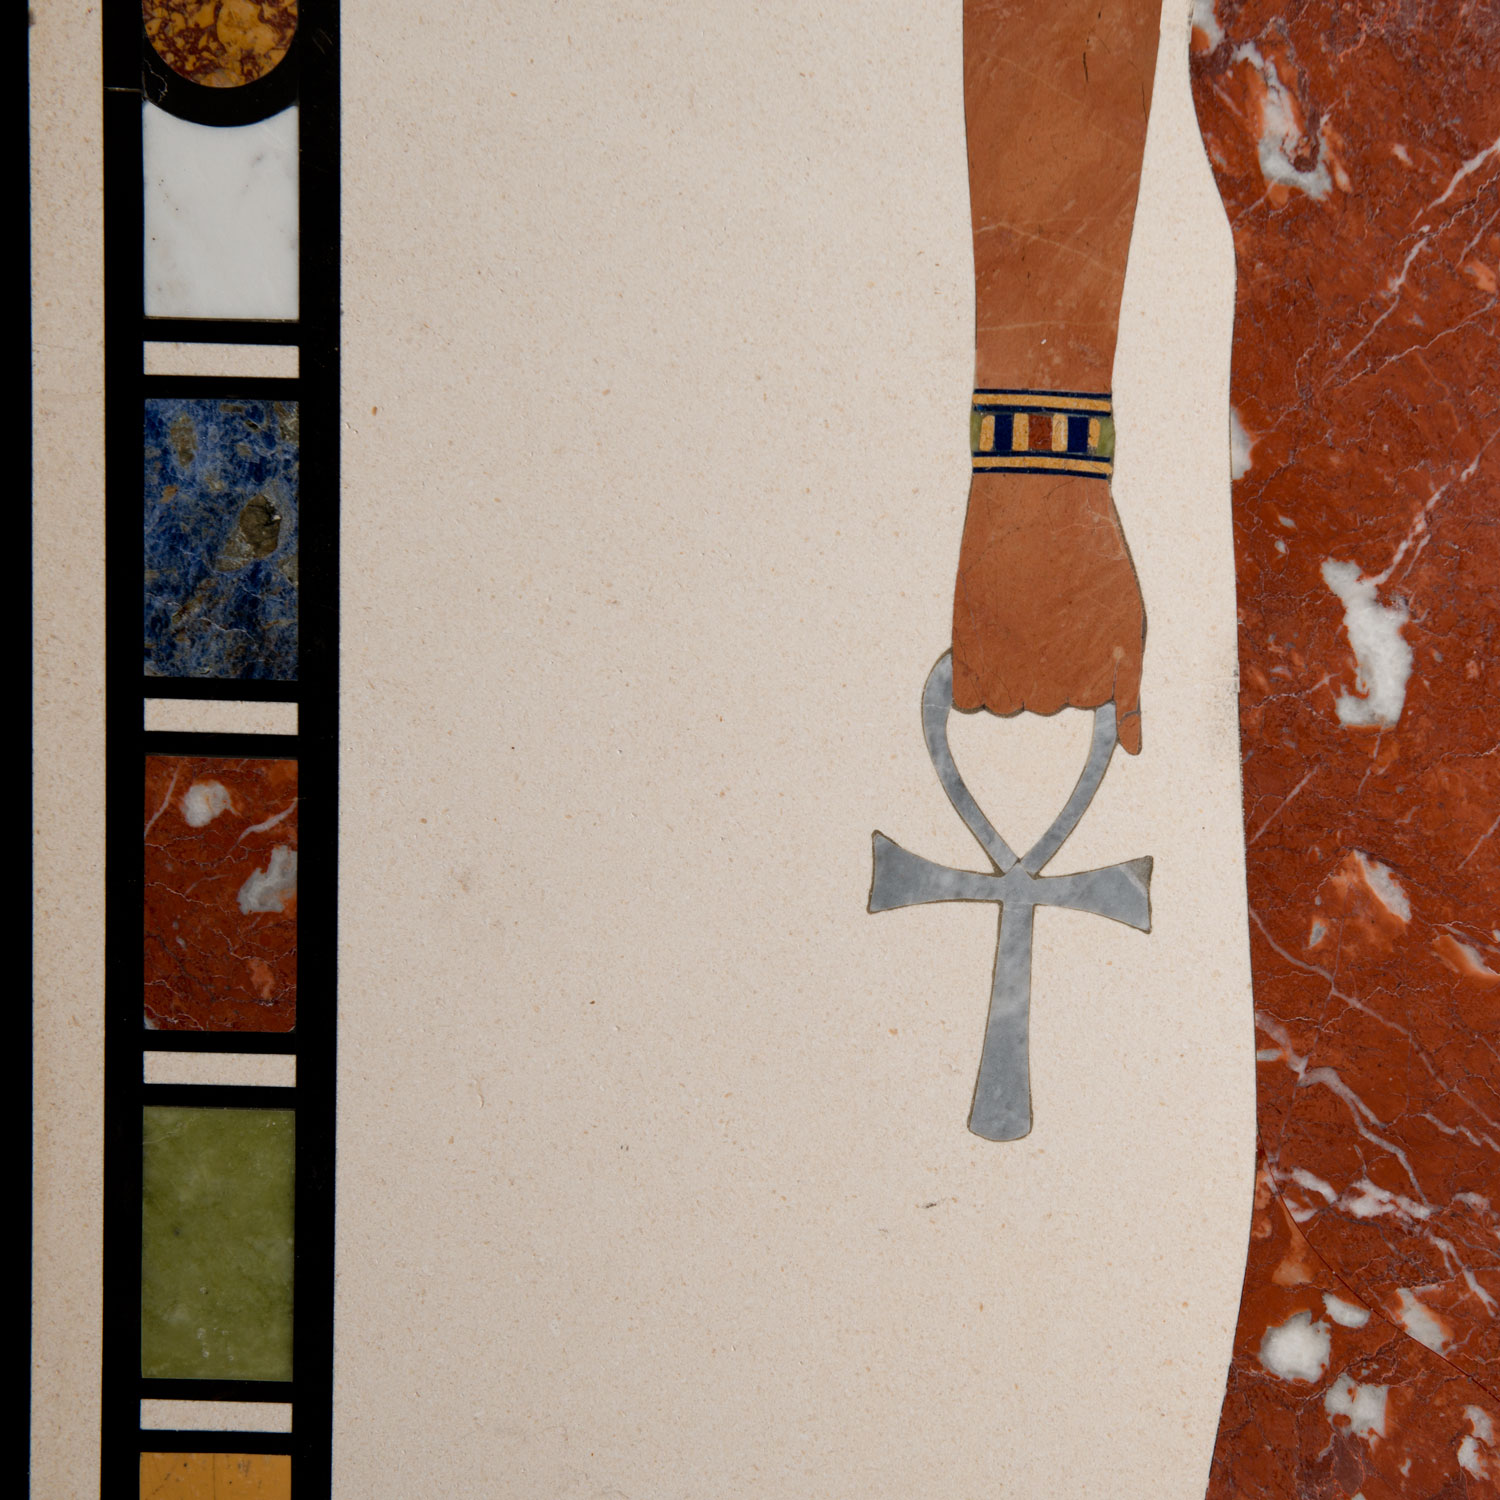 Egyptomanian pietra dura panel - Image 2 of 3